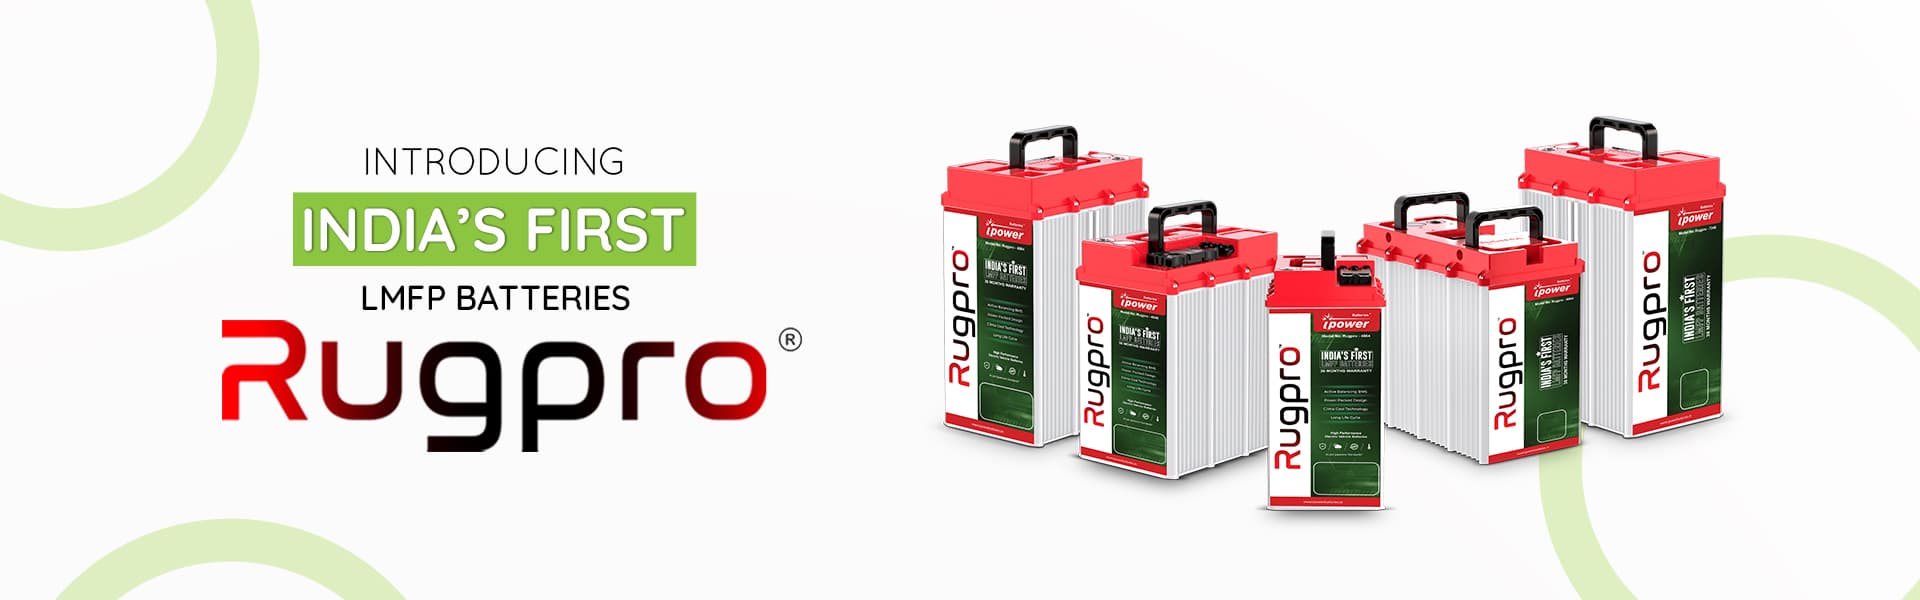 Rugpro LMFP Batteries